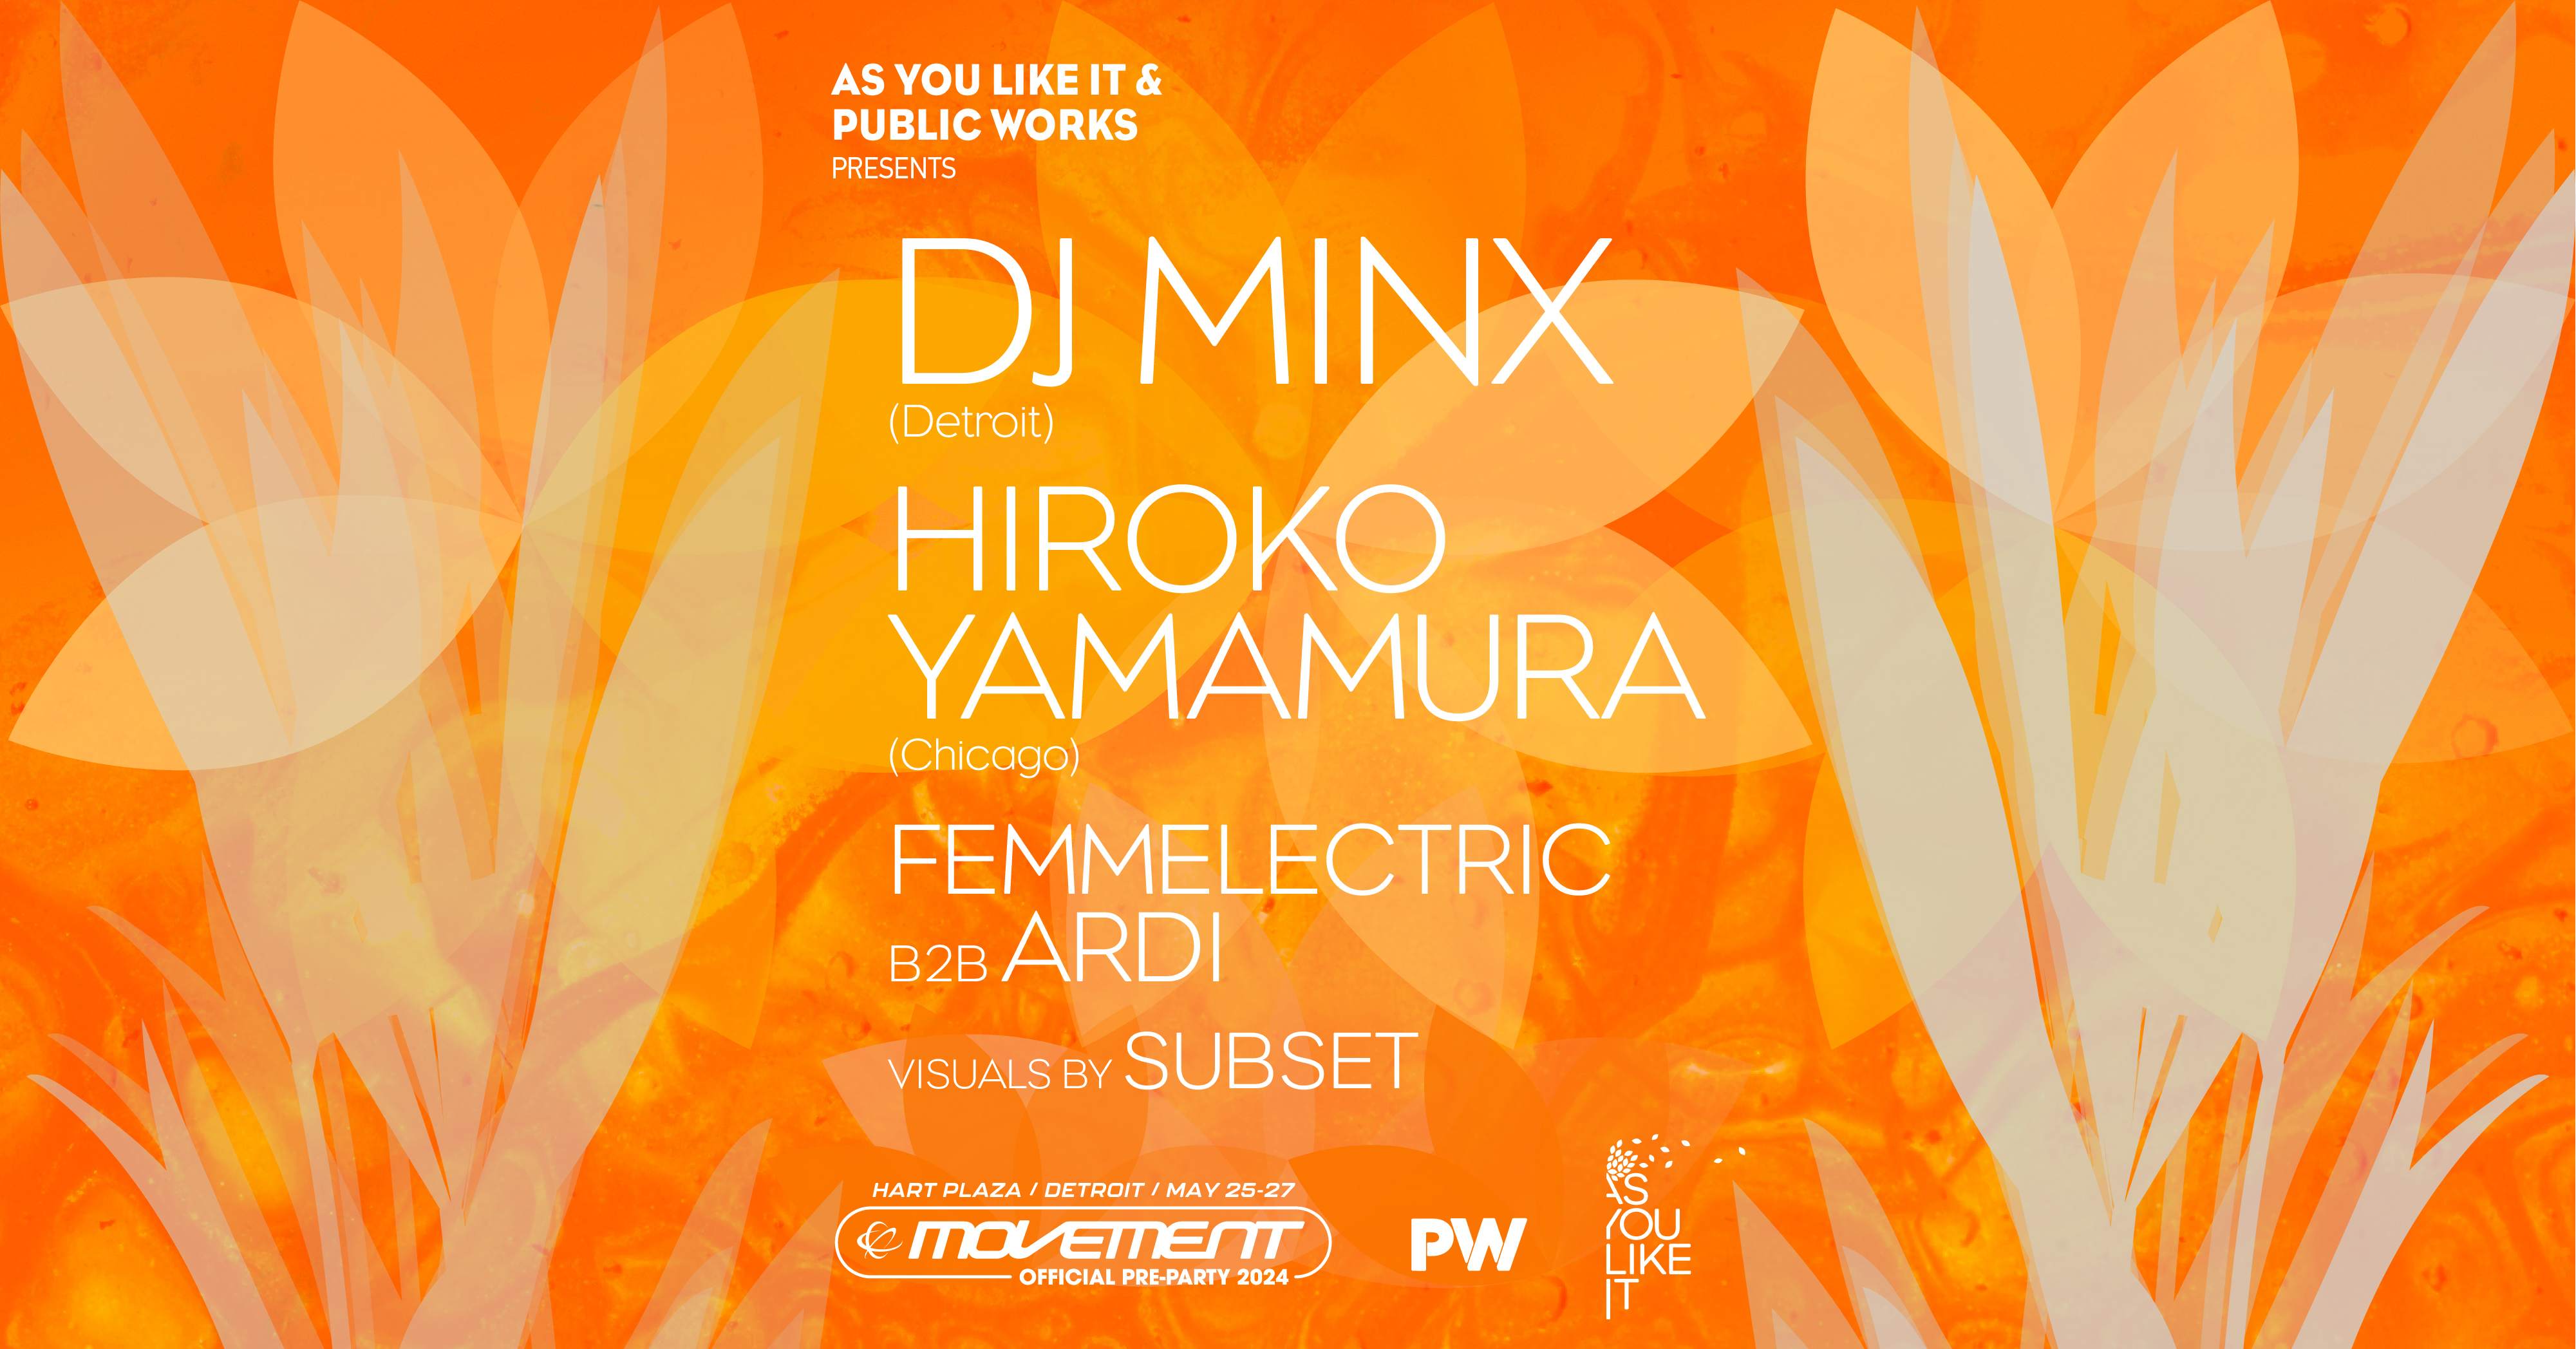 AYLI & PW present DJ Minx & Hiroko Yamamura (Movement Pre-Party) - Página frontal